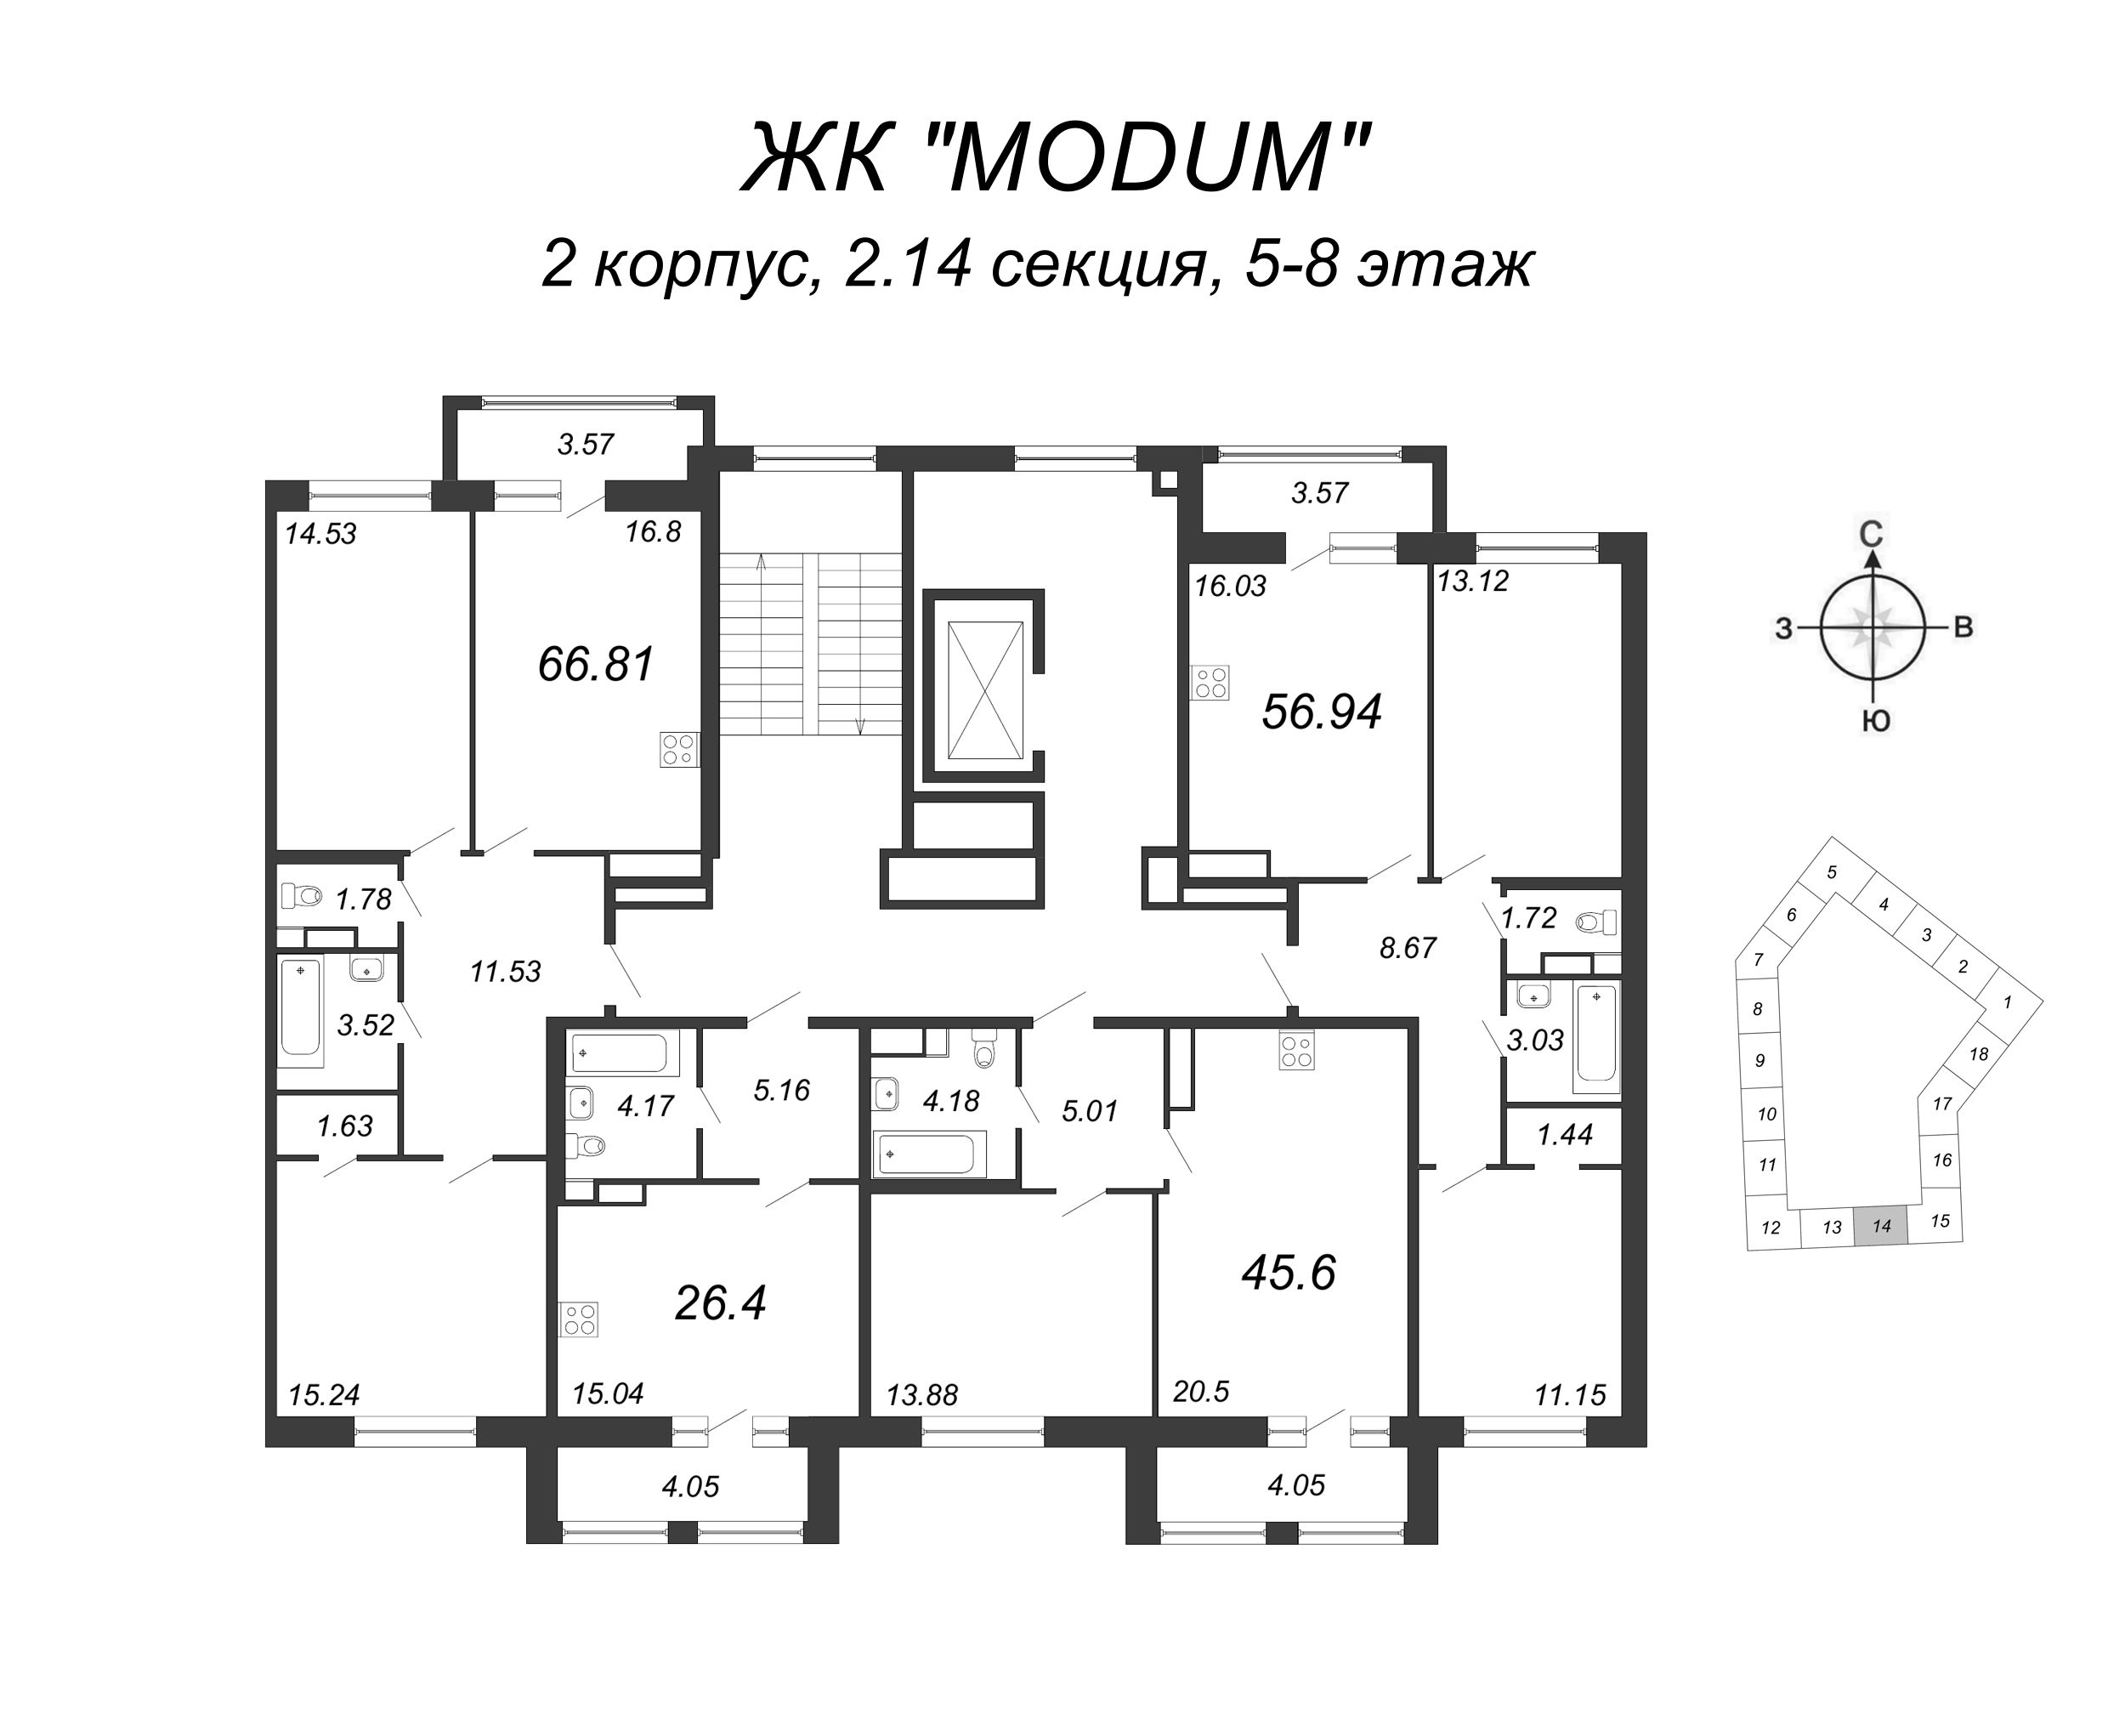 3-комнатная (Евро) квартира, 66.81 м² - планировка этажа